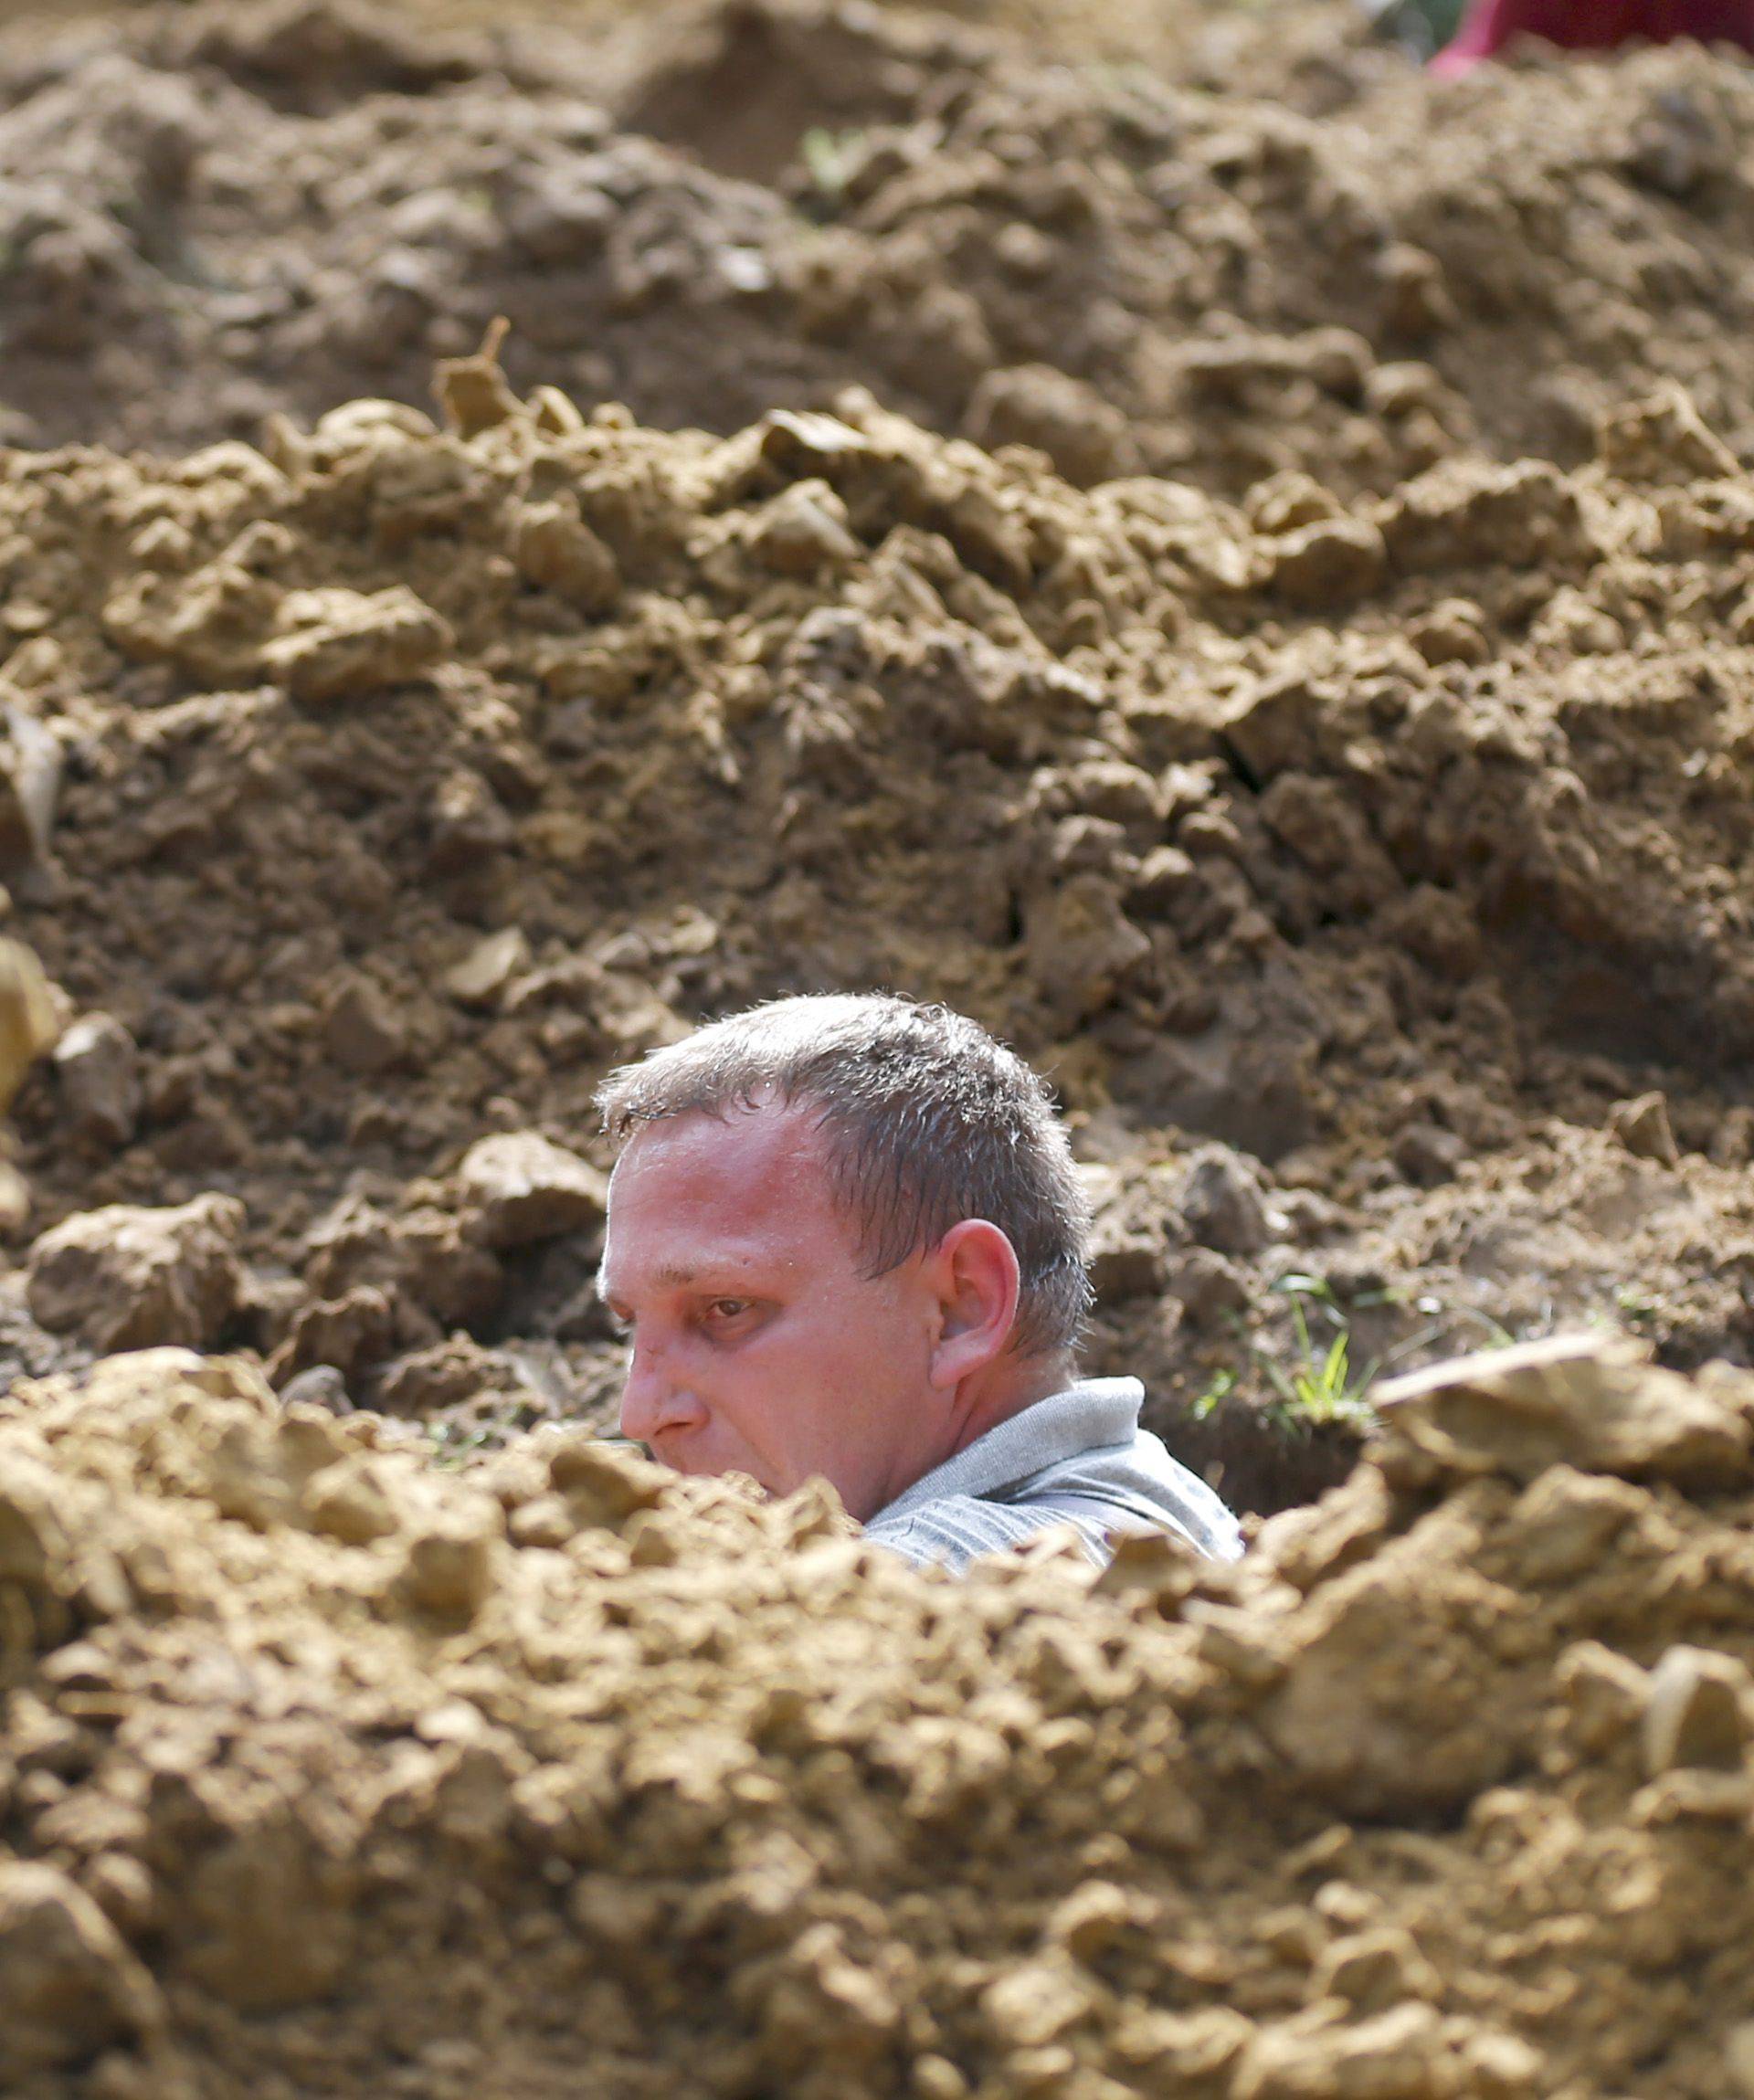 Gravedigger competes in Hungarian grave digging championship in Debrecen